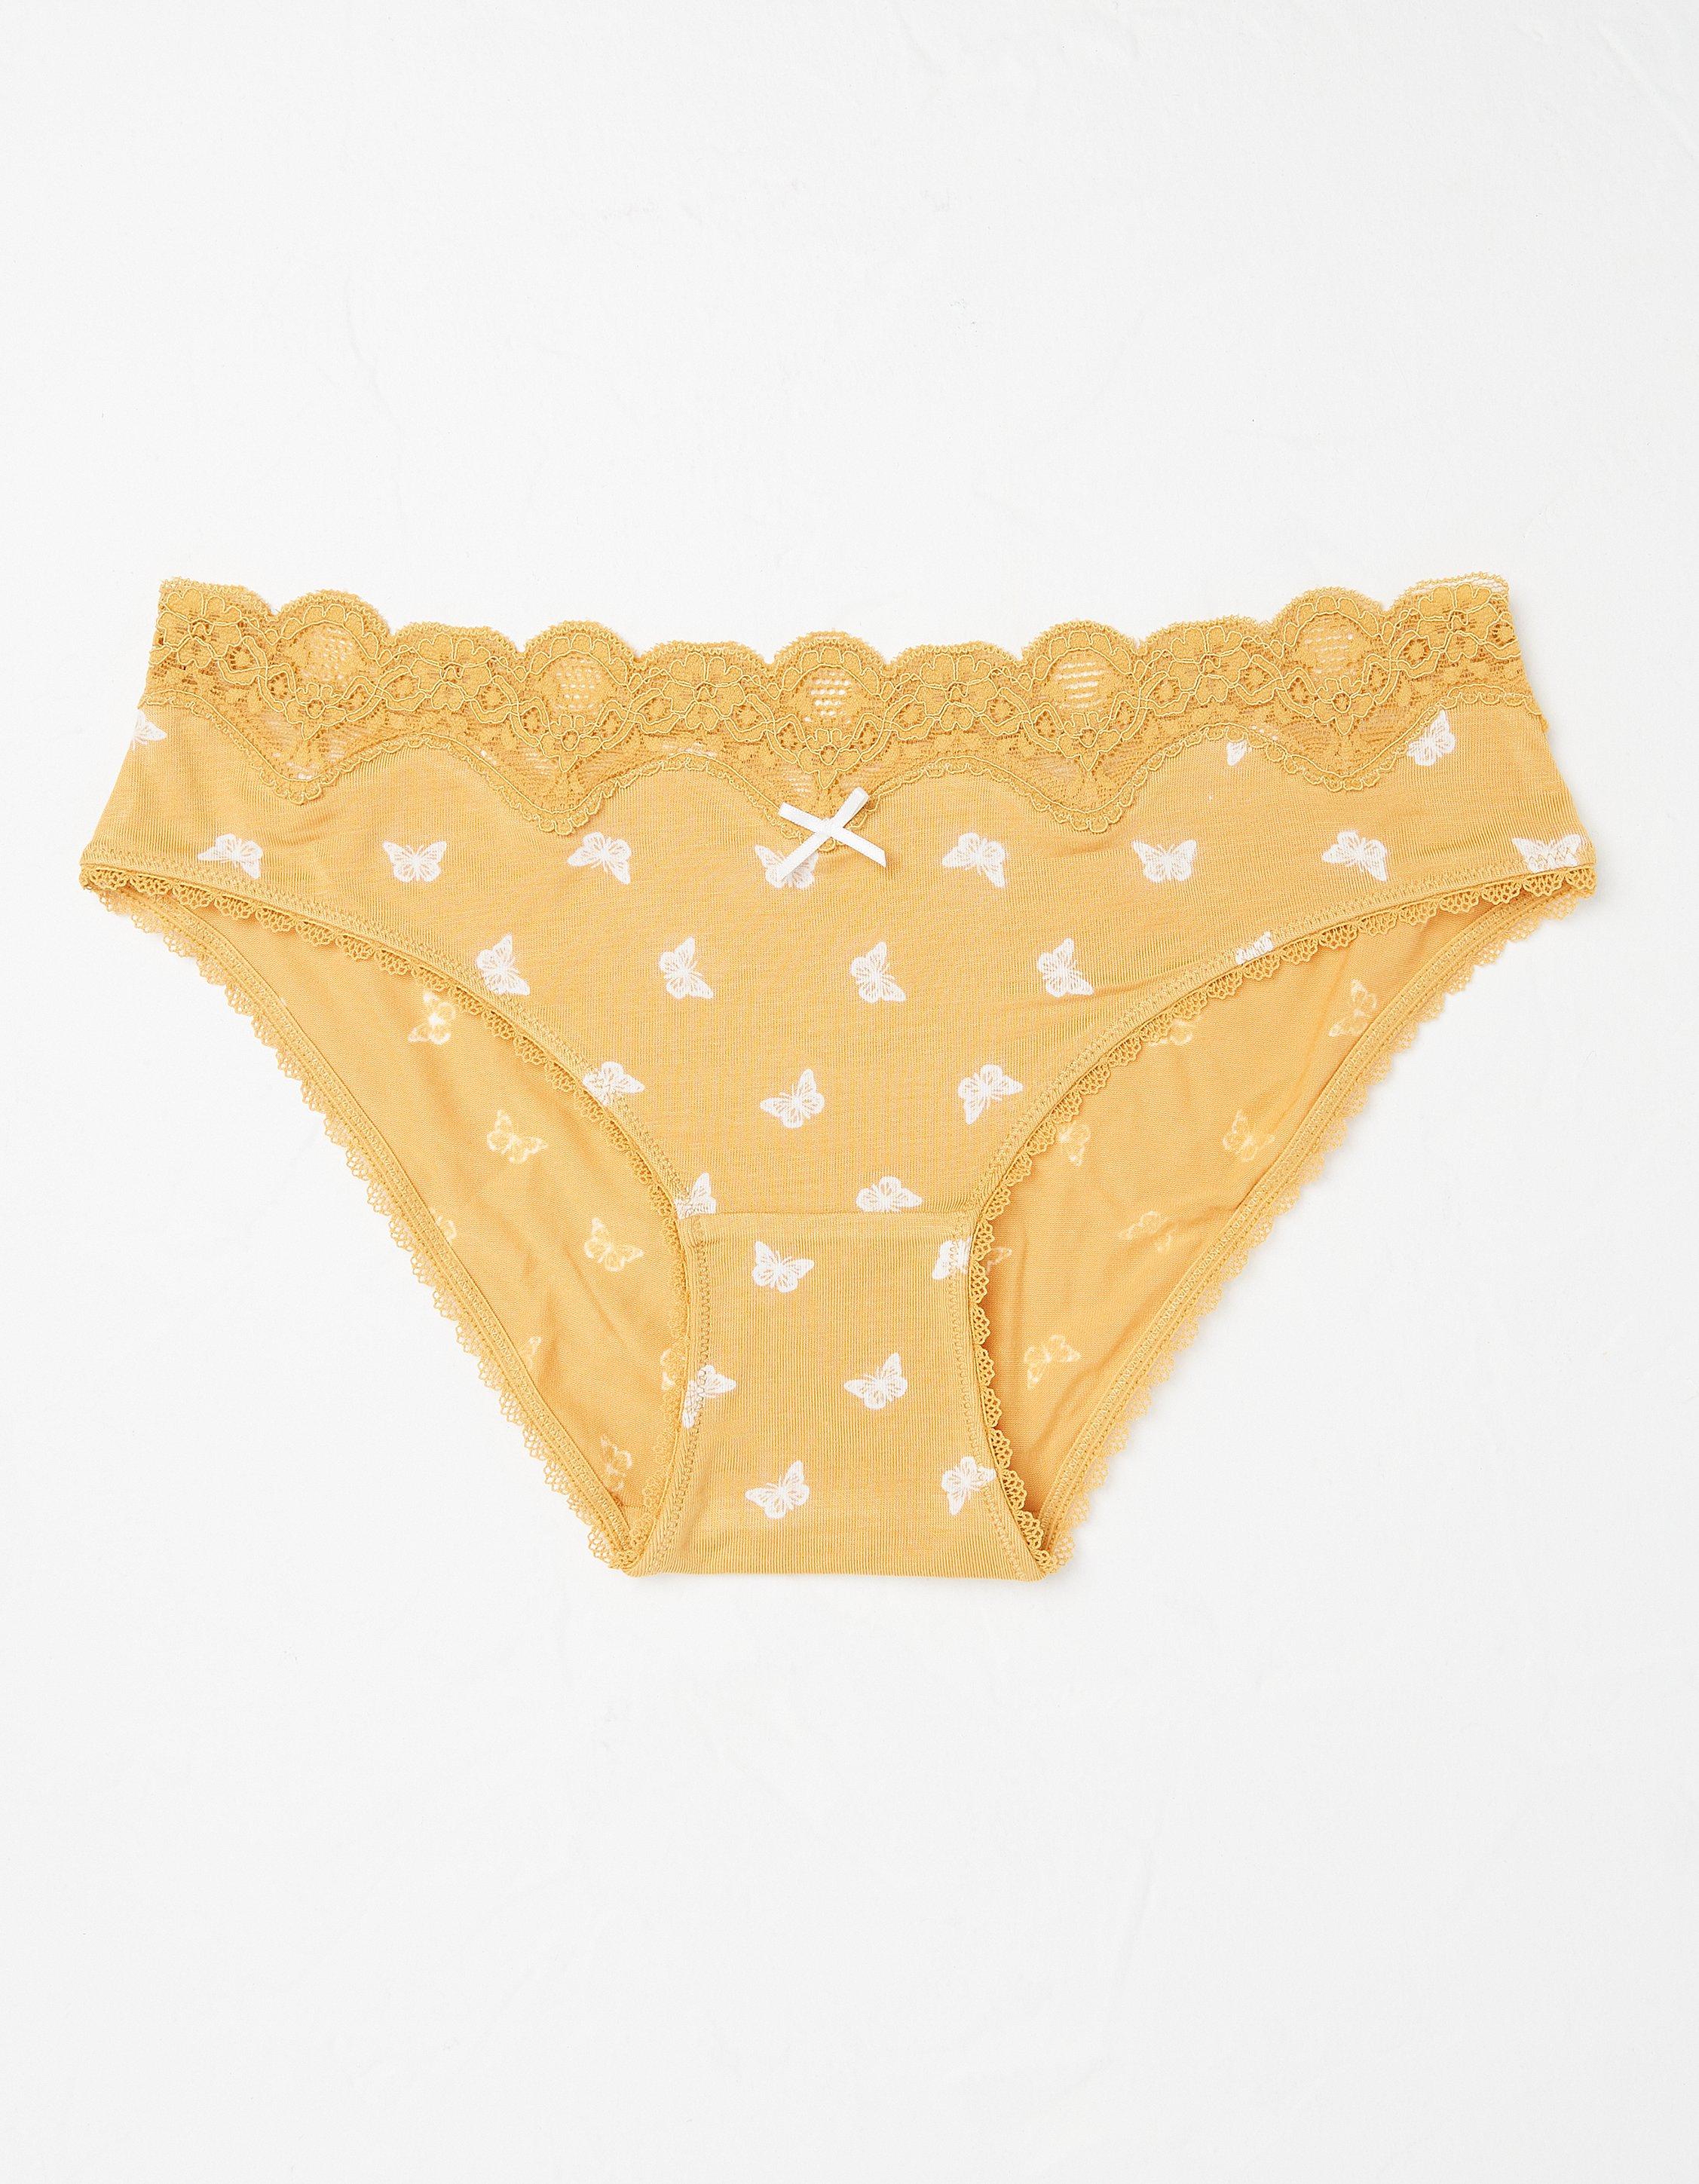 Hollister Yellow Cotton Butterfly Print Cheeky Underwear Lingerie Pants  BNWT - M